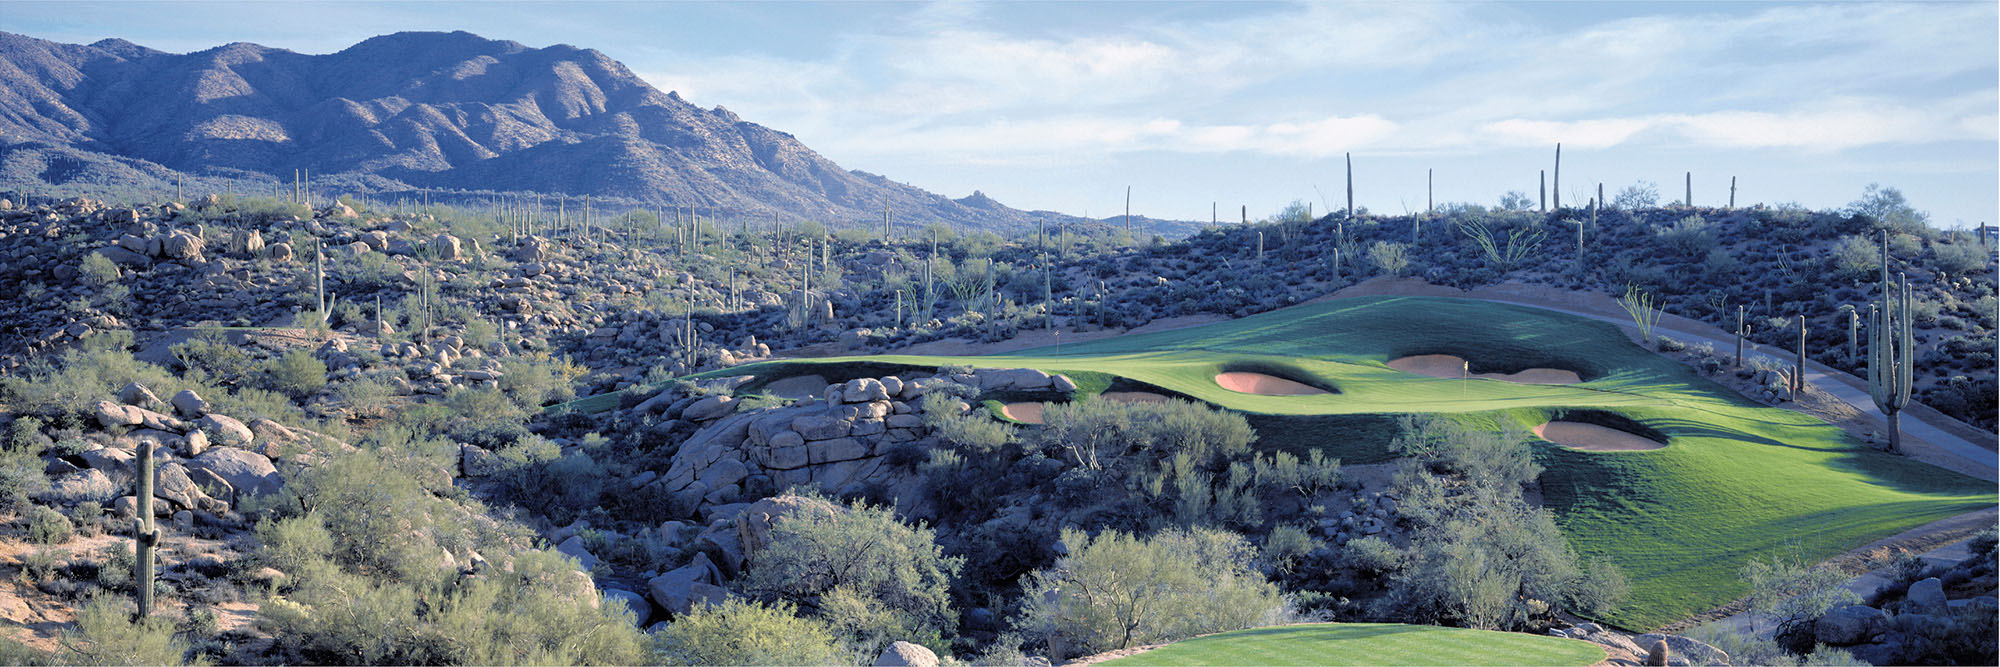 Golf Course Image - Desert Mountain Chiricahua No. 14